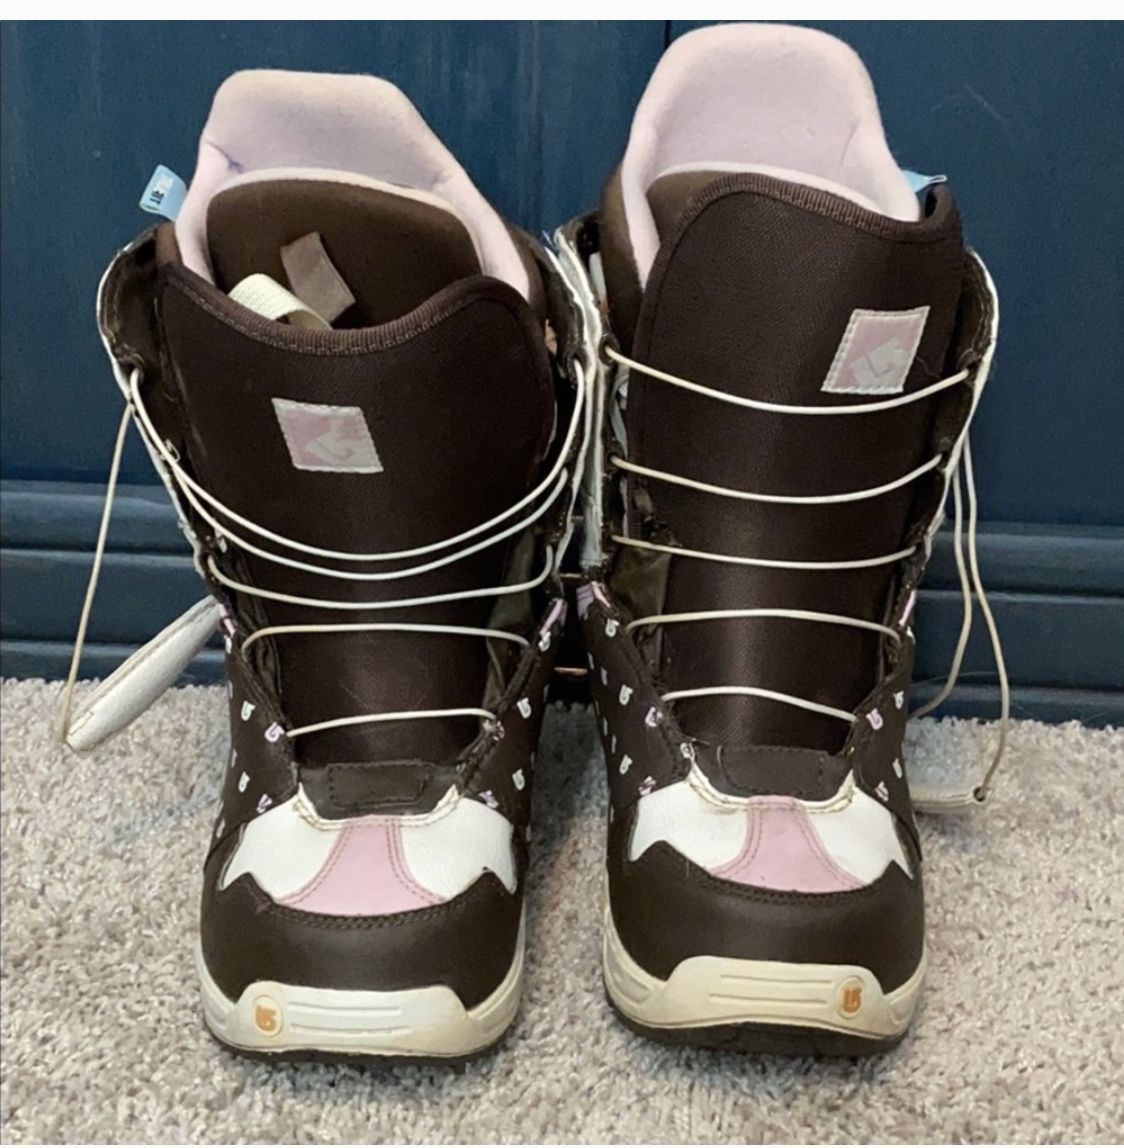 BURTON WOMEN’S Snowboarding Boots